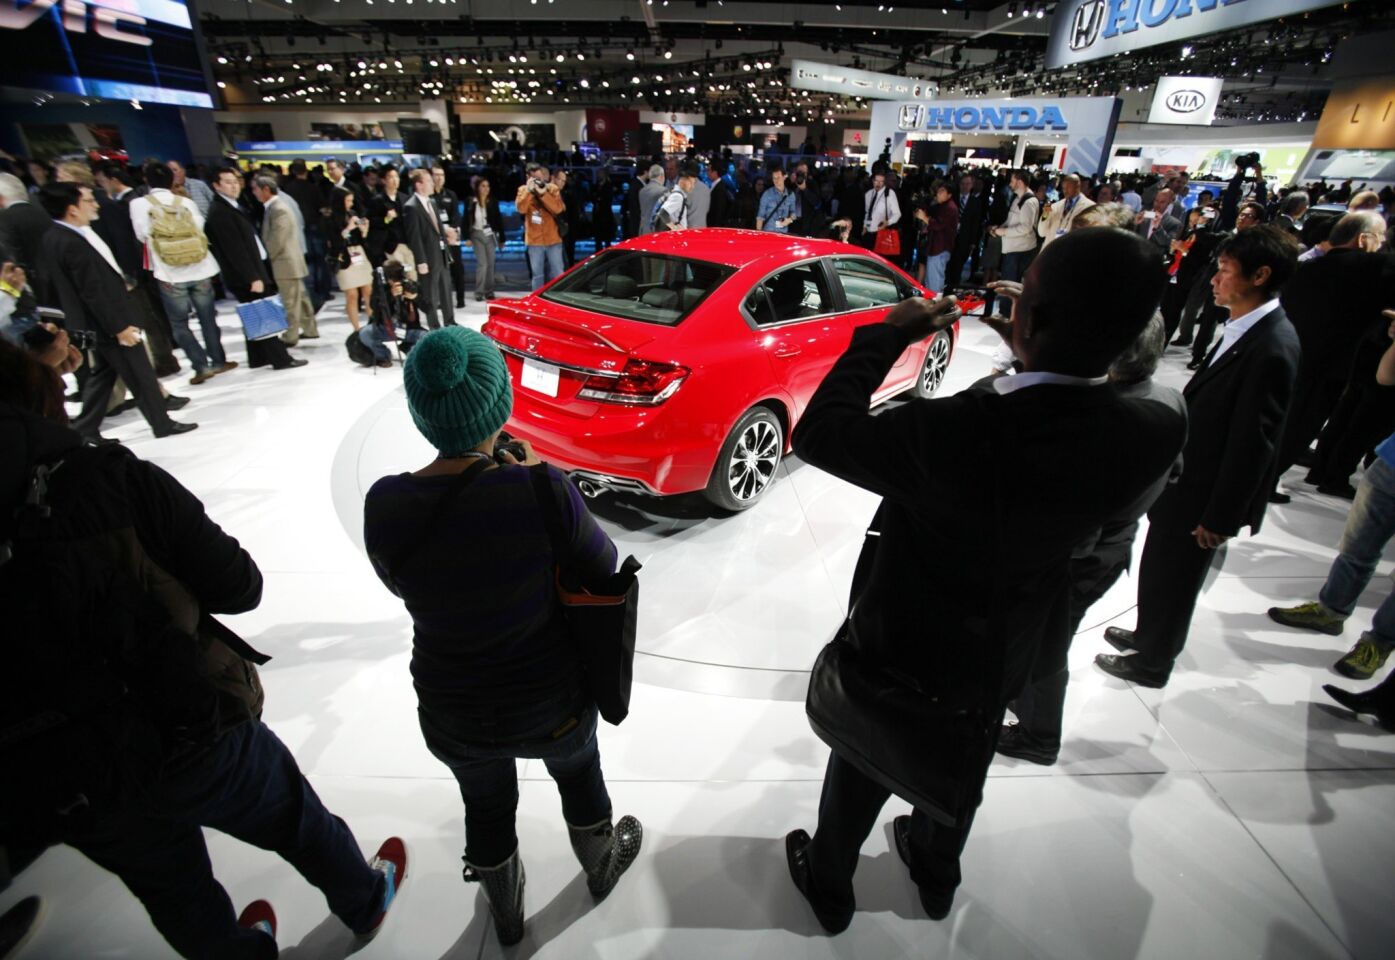 The 2013 Honda Civic draws a crowd.